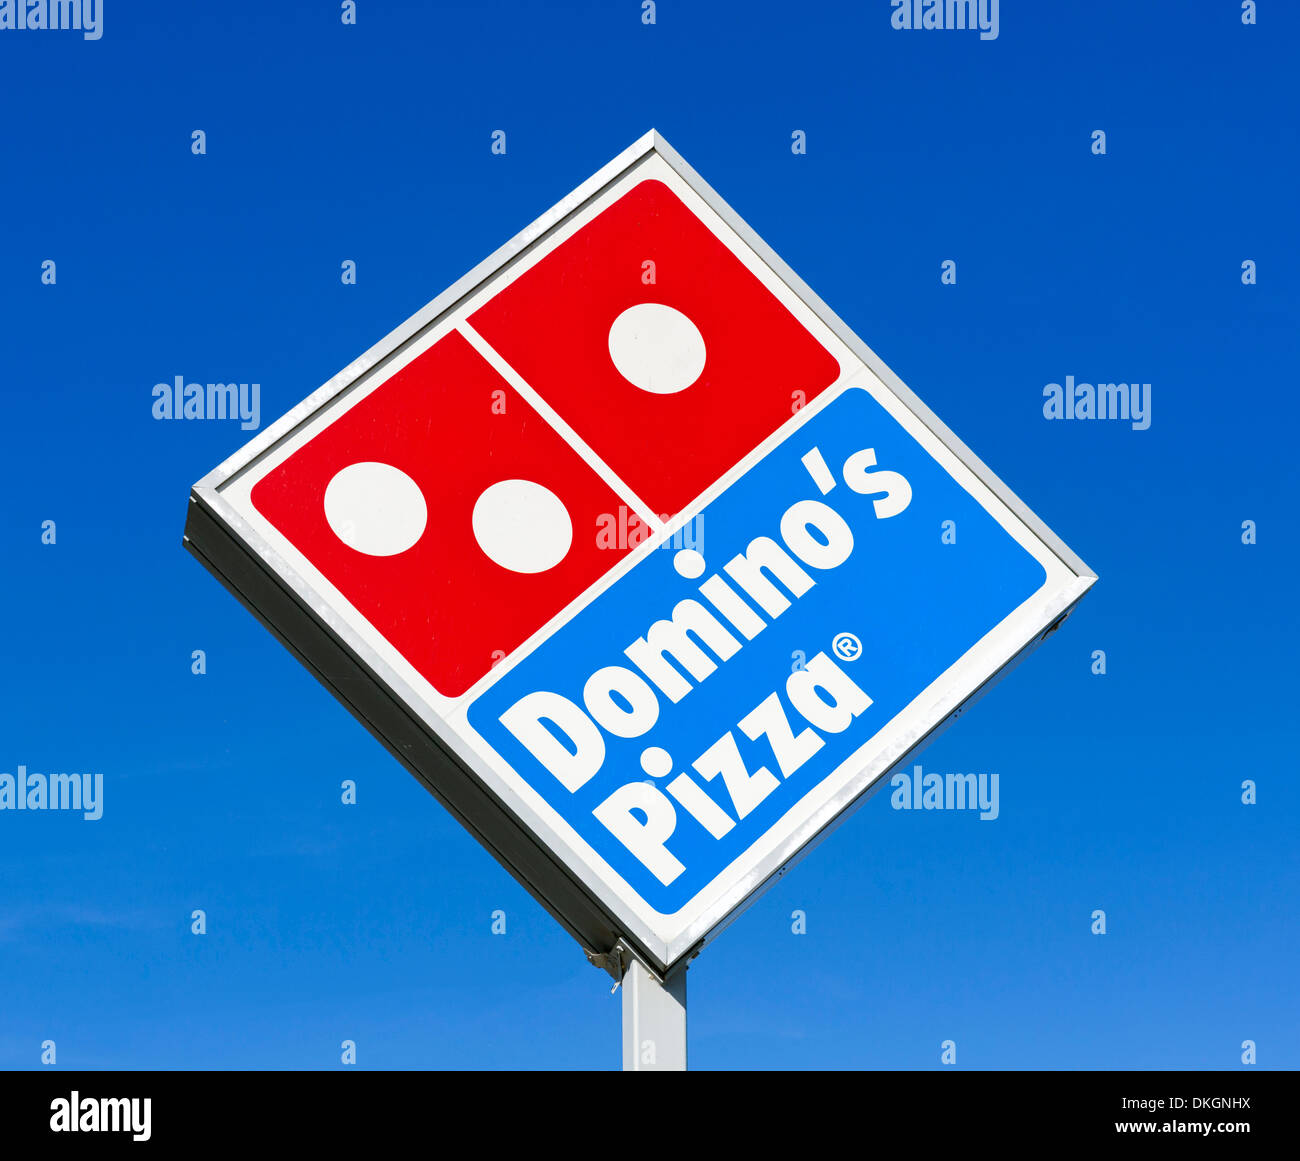 Borrar Máxima creencia Dominos pizza usa fotografías e imágenes de alta resolución - Alamy